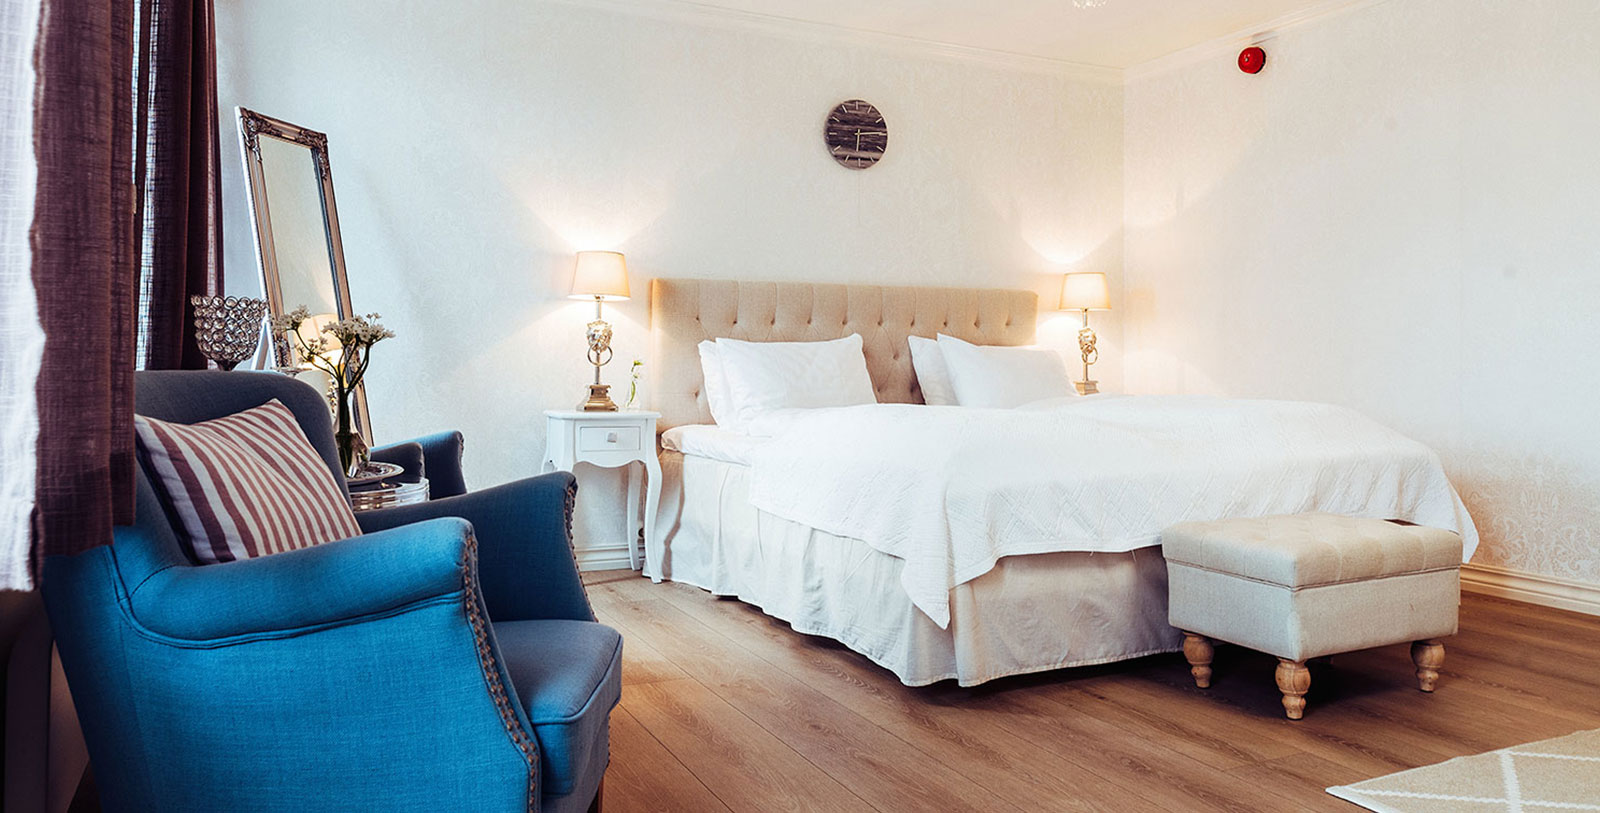 Image of guestroom Bekkjarvik Gjestgiveri, 1700s, Member of Historic Hotels Worldwide, in Norway, Accommodations